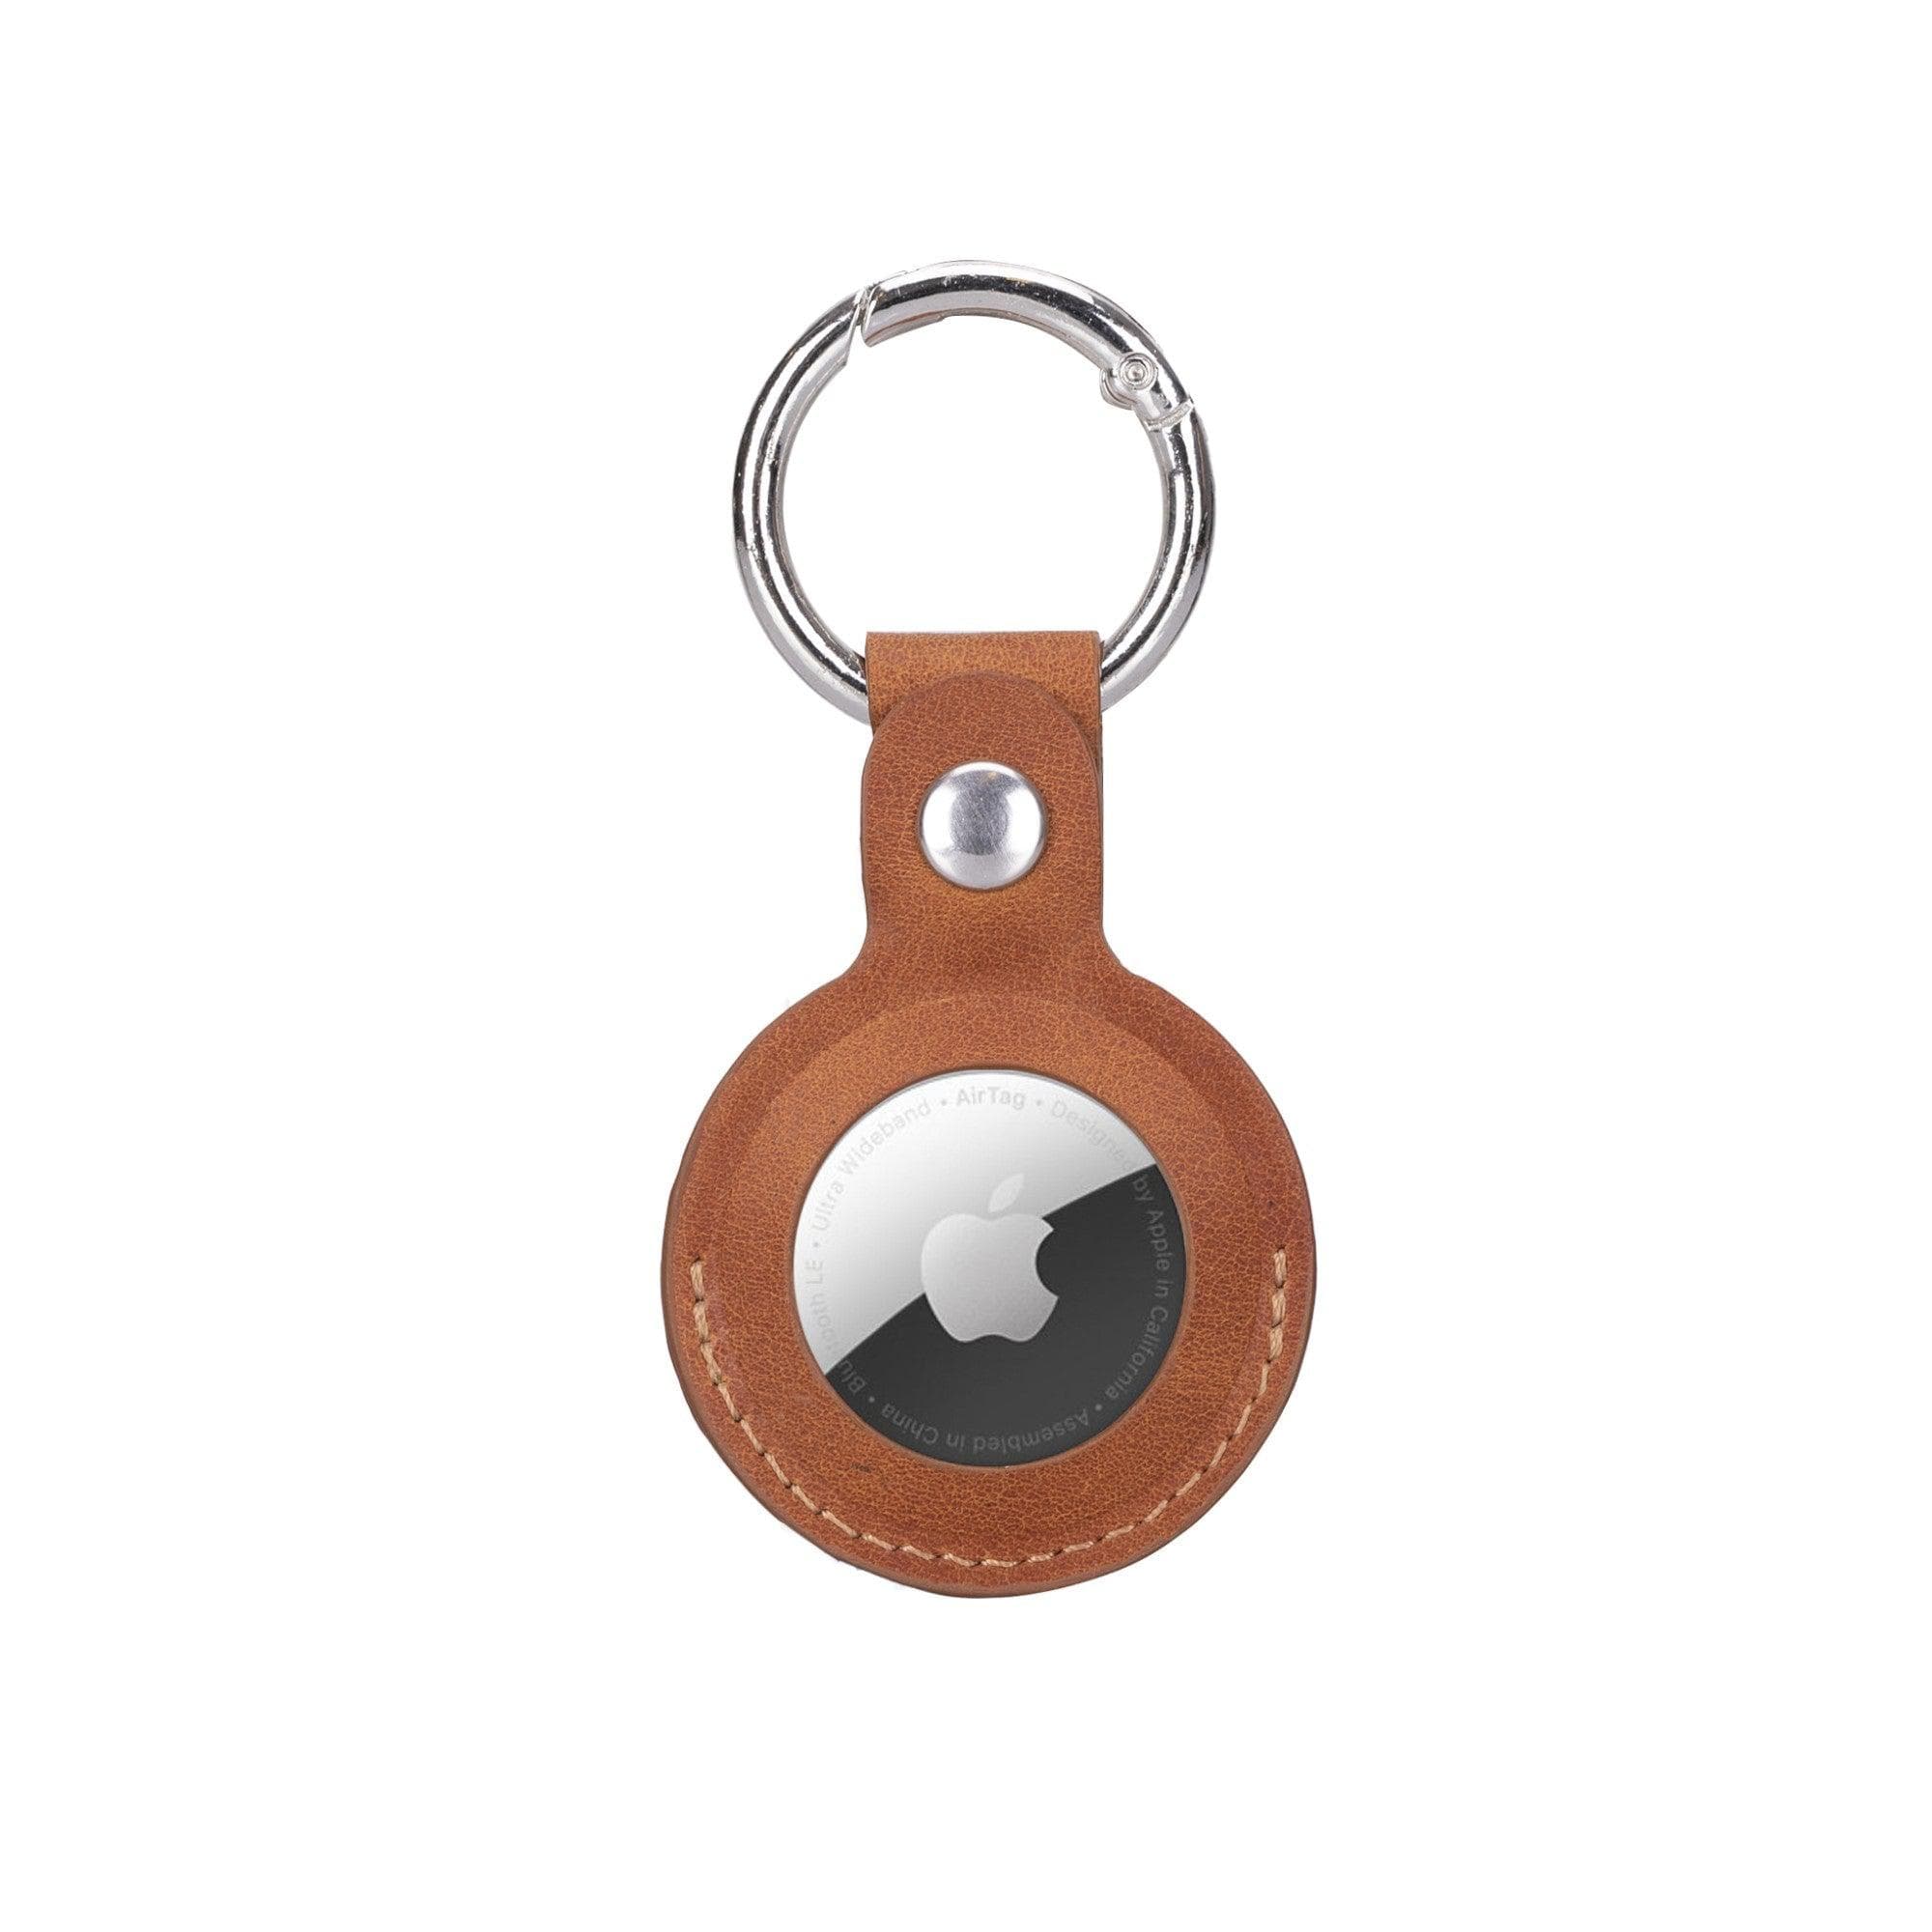 Arta Genuine Leather Keychain for Apple Airtag Tiguan Tan / Leather Bouletta LTD